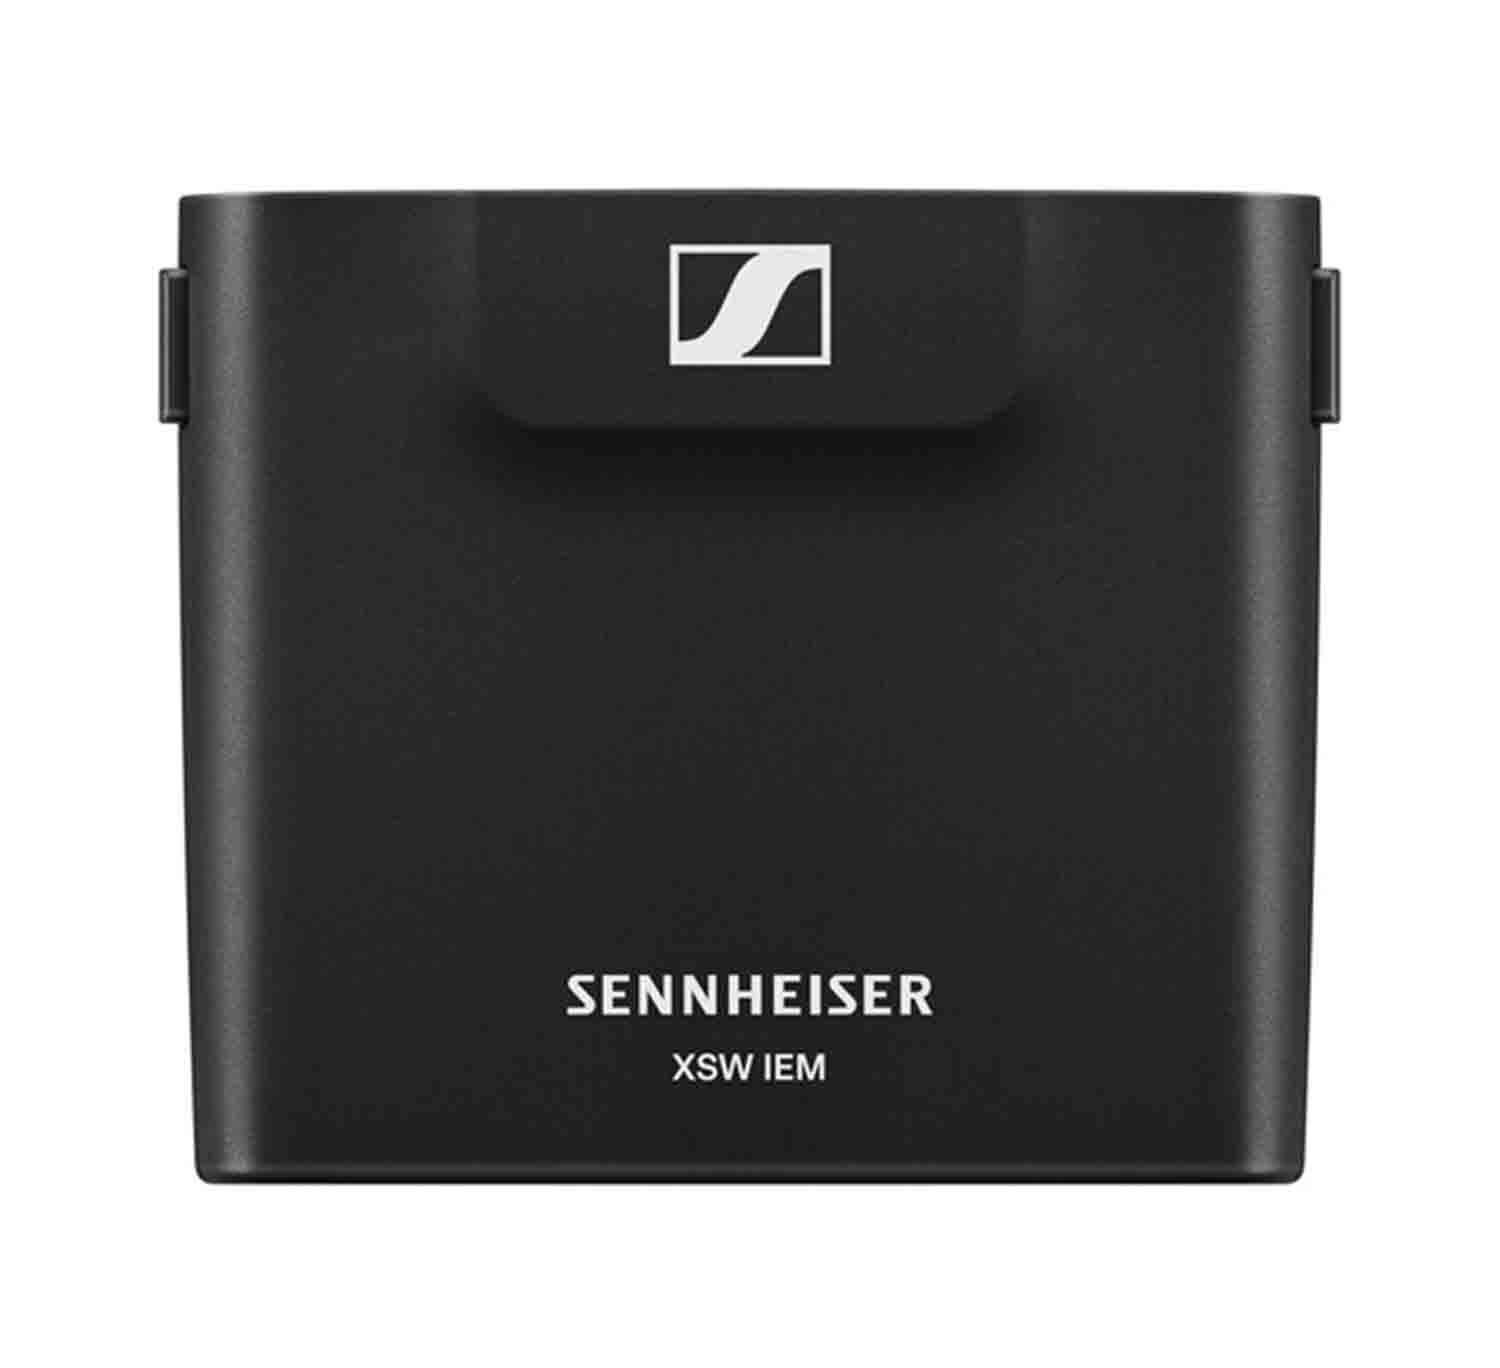 Sennheiser XSW IEM EK BATT CVR, Battery Cover for XSW IEM EK Bodypack Wireless Receiver - Hollywood DJ